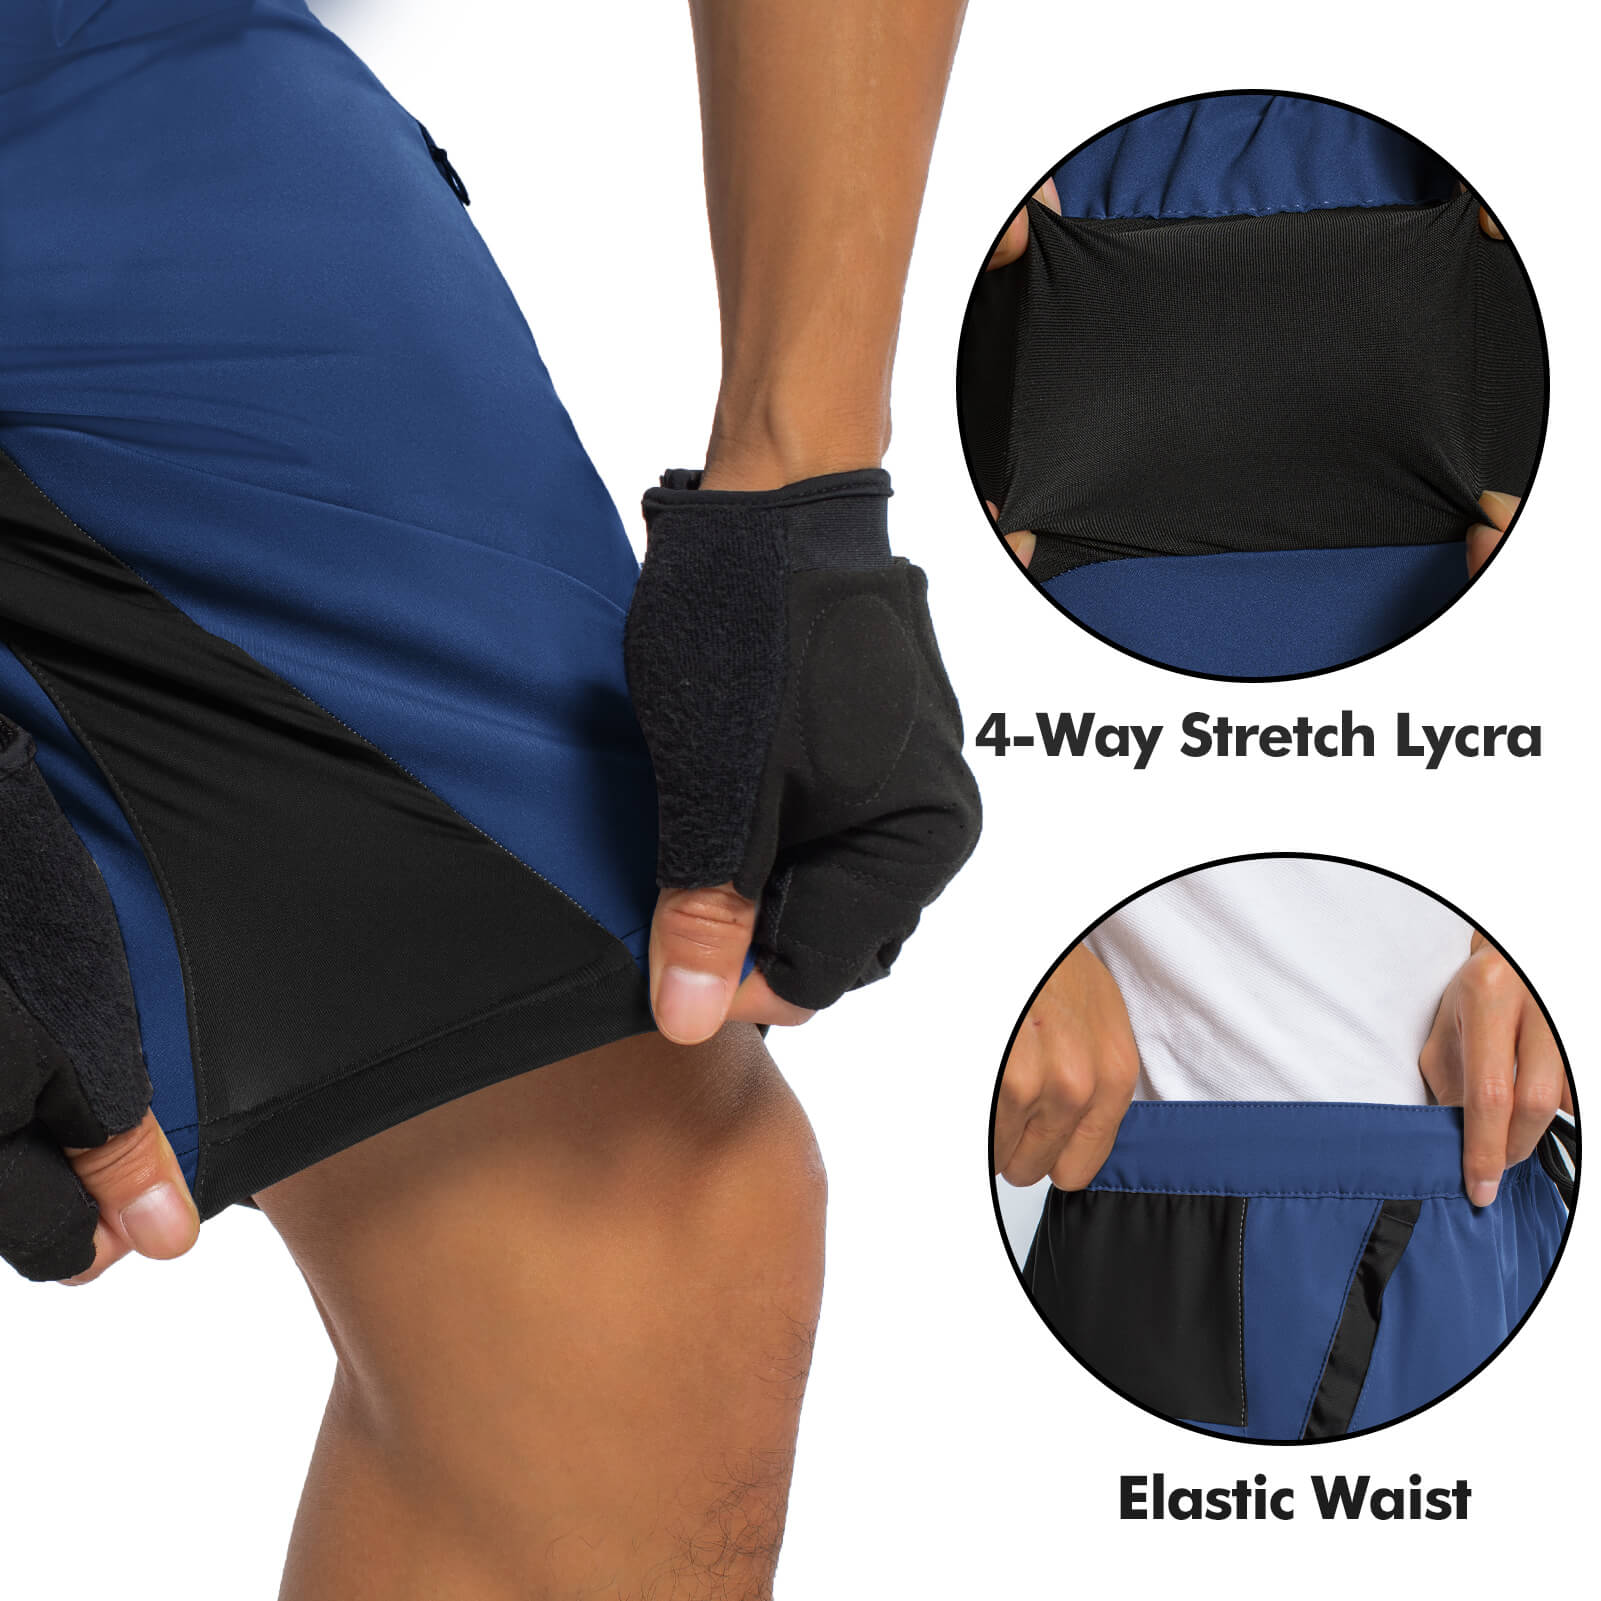 Men's Adjustable Drawstring MTB Shorts With Liner 014A